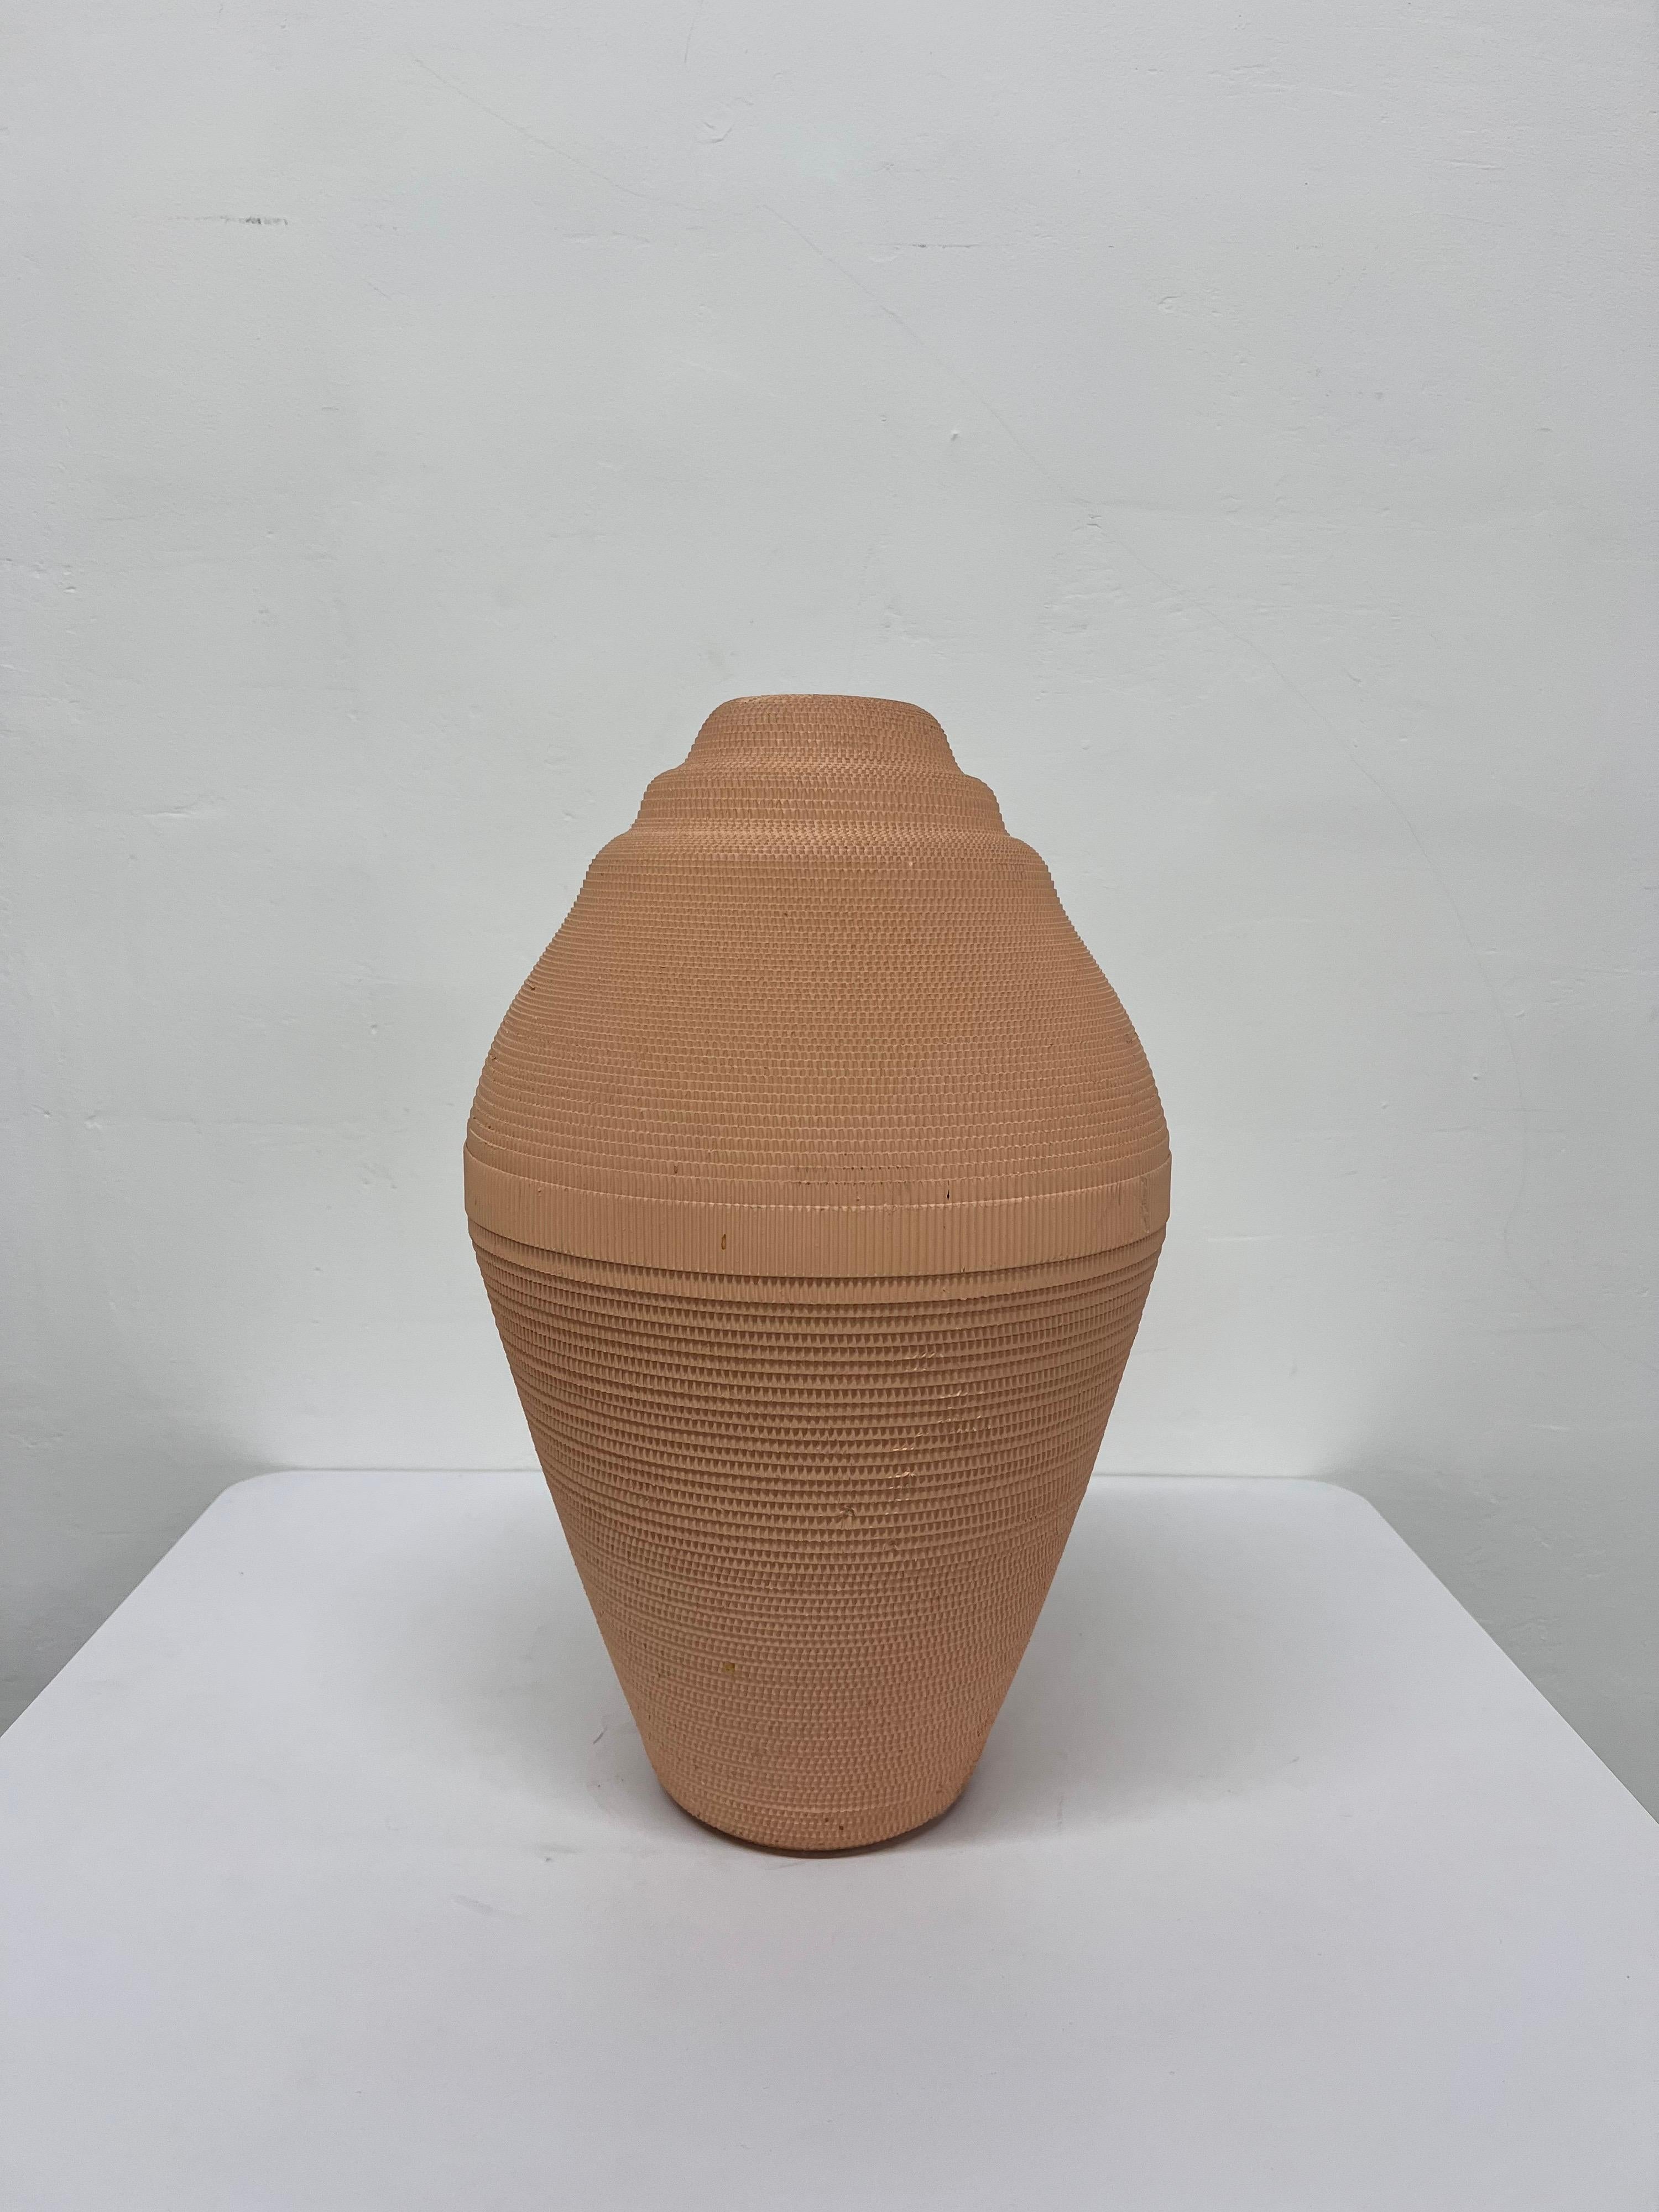 cardboard vases